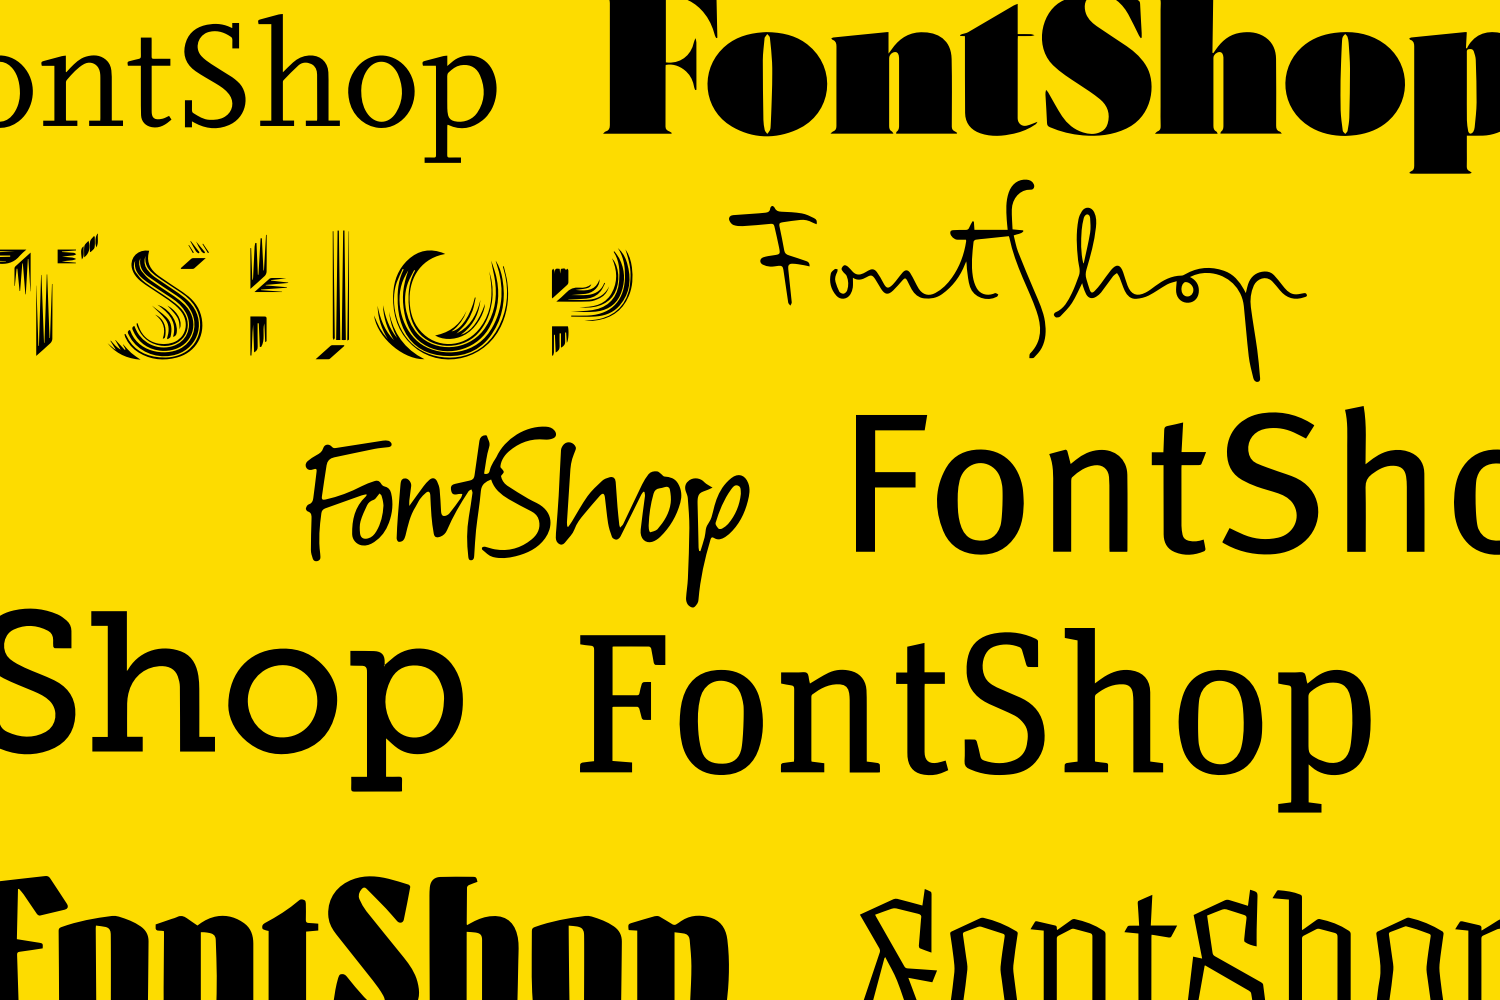 fontshop-header